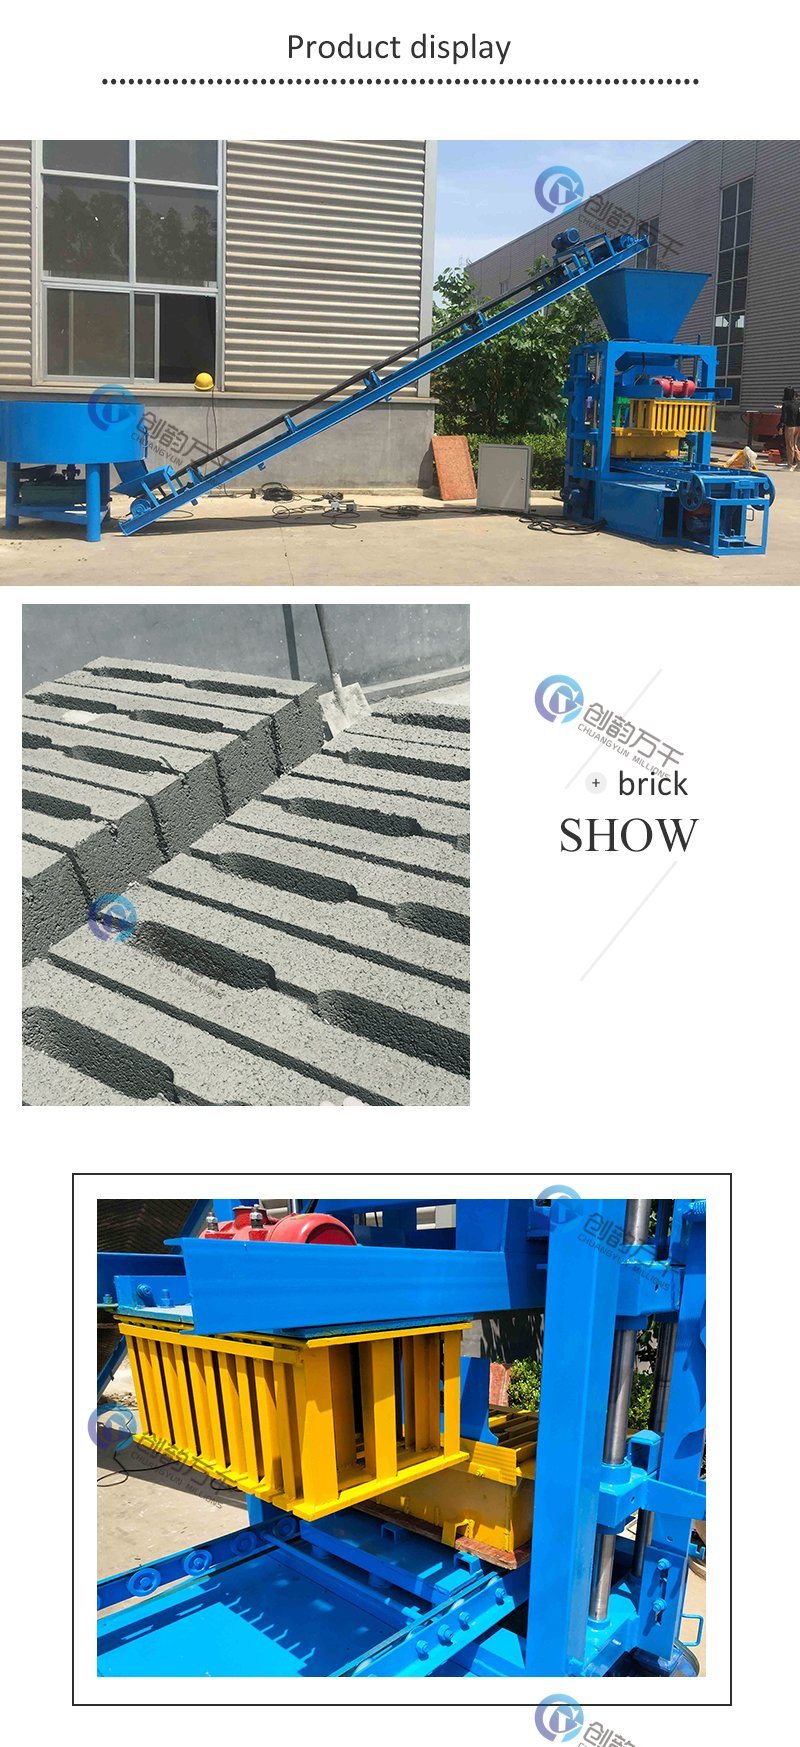 Qt 4-24 Semi Automatic Paving Stone Concrete Hollow Brick Making Machine